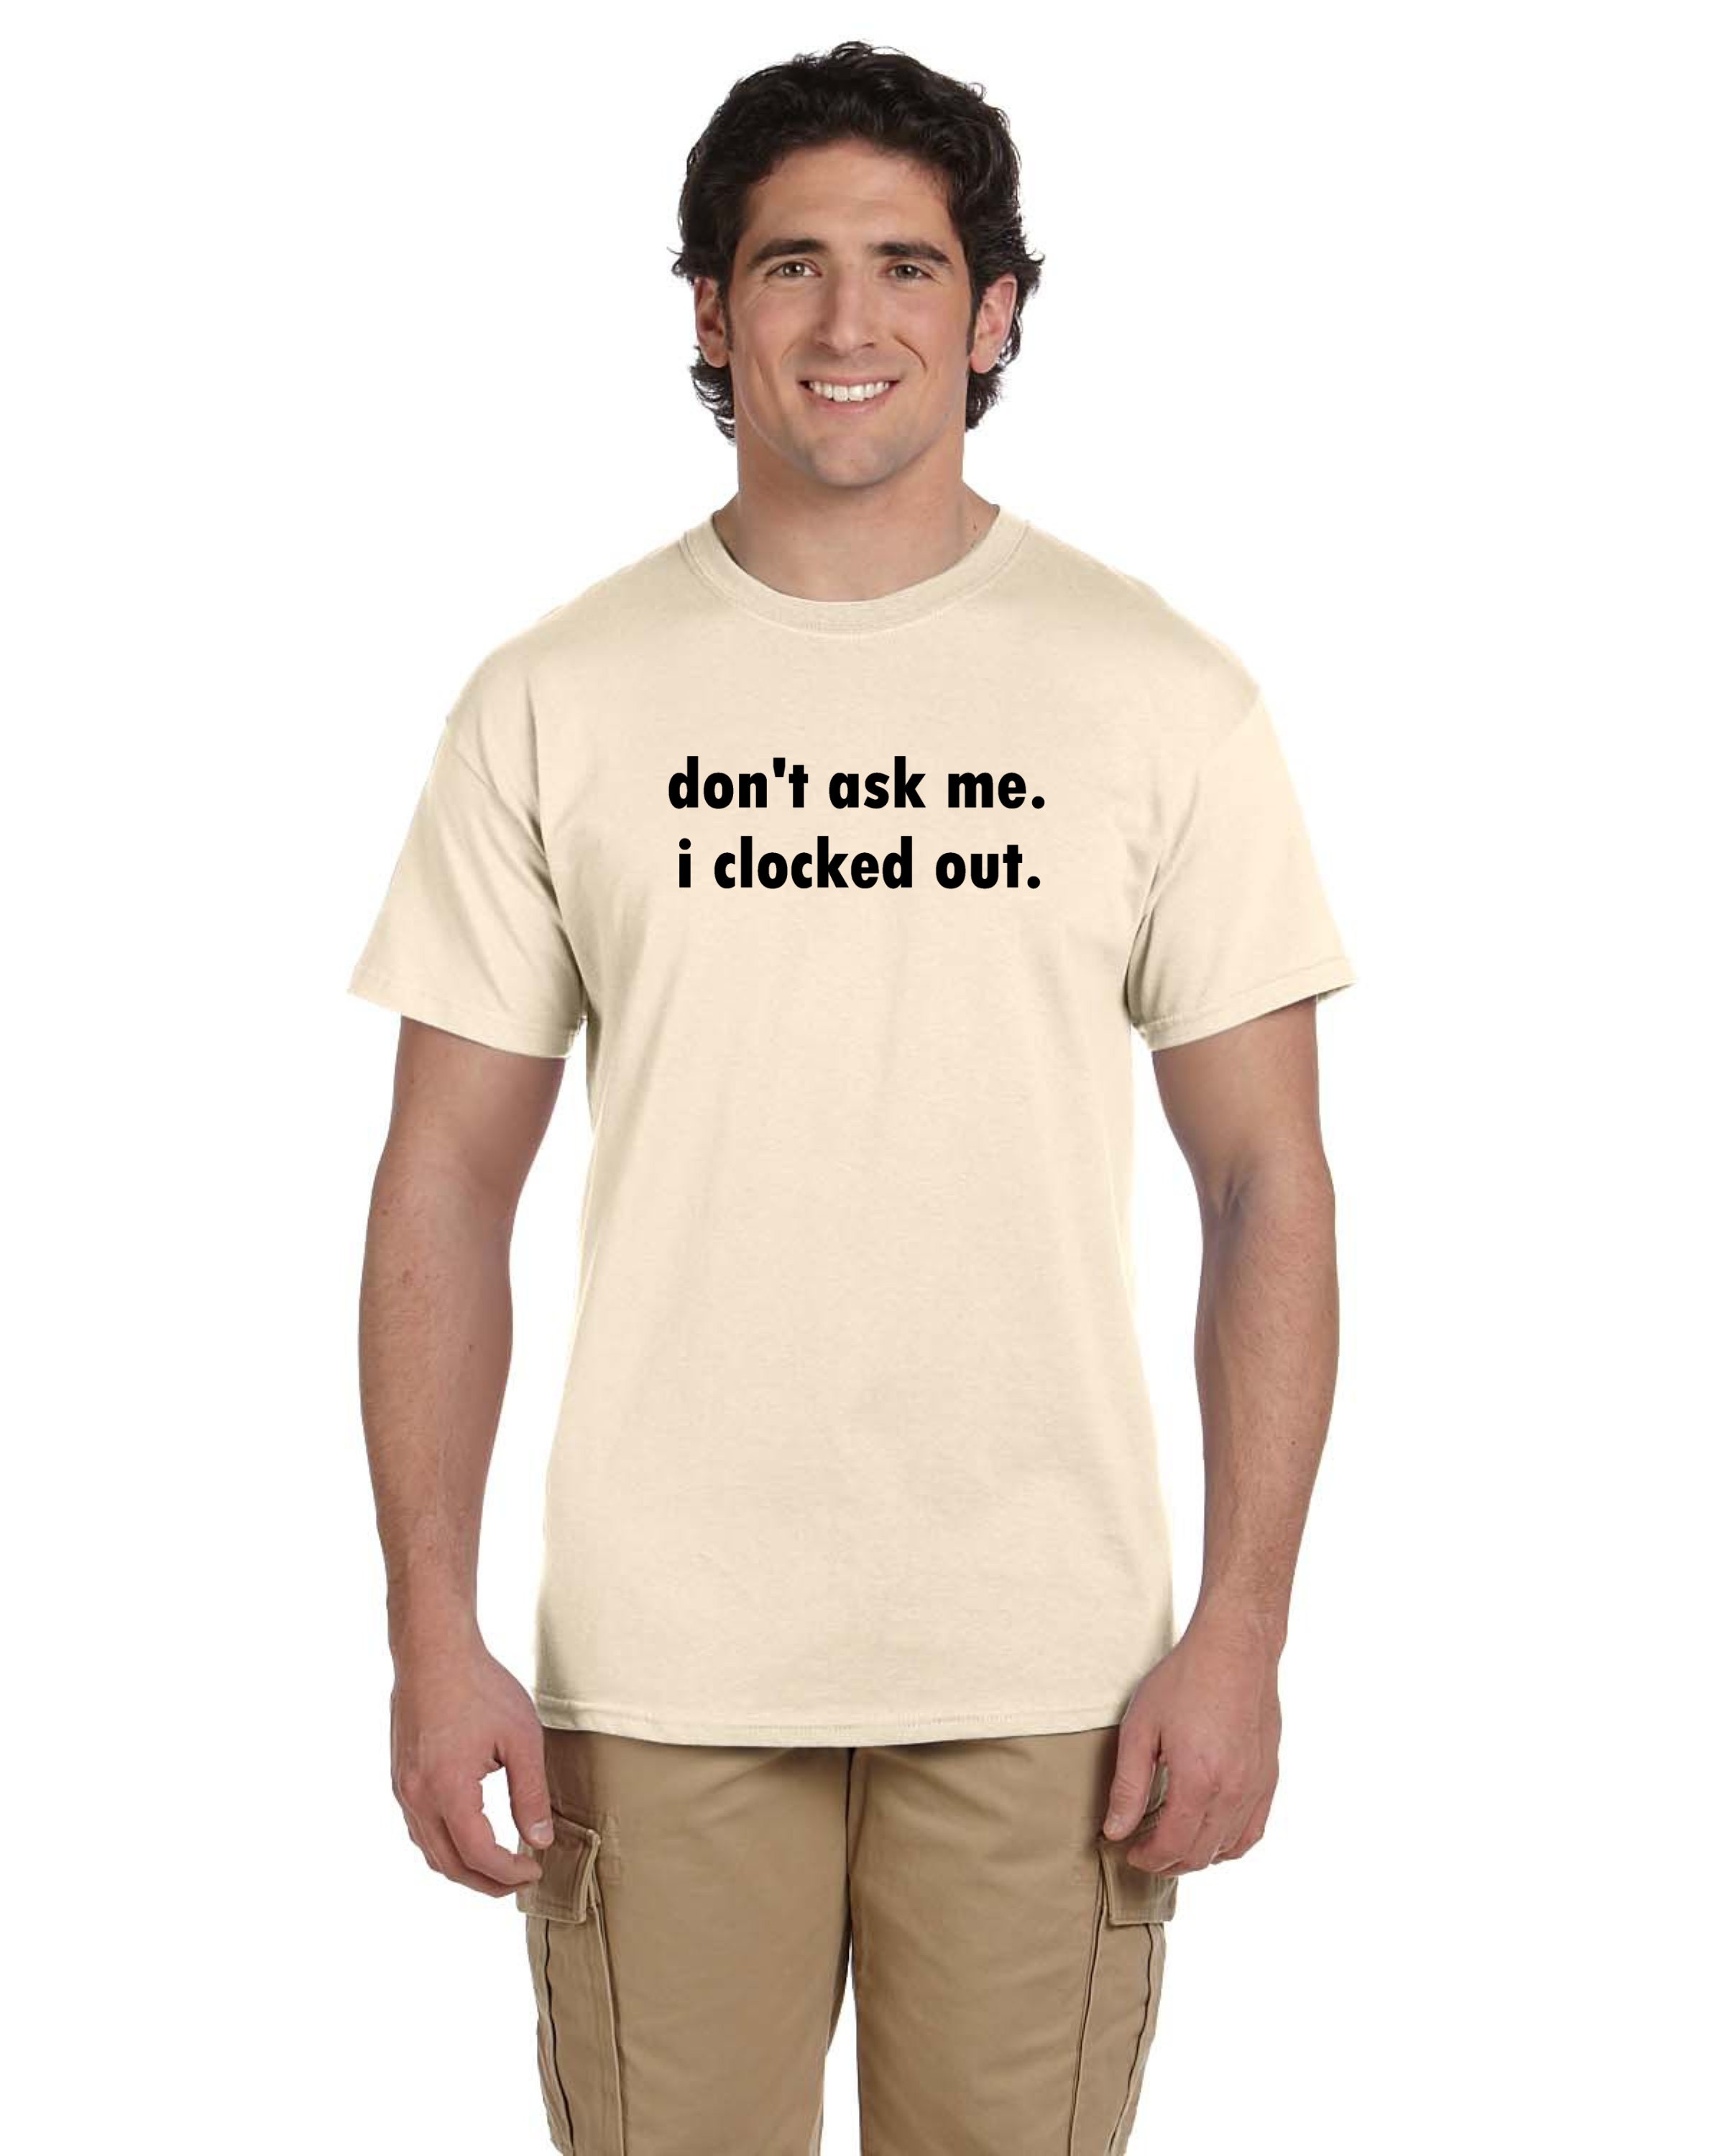 Don't Ask Me Shirt Life T-shirt Work Shirt Humorous - Etsy